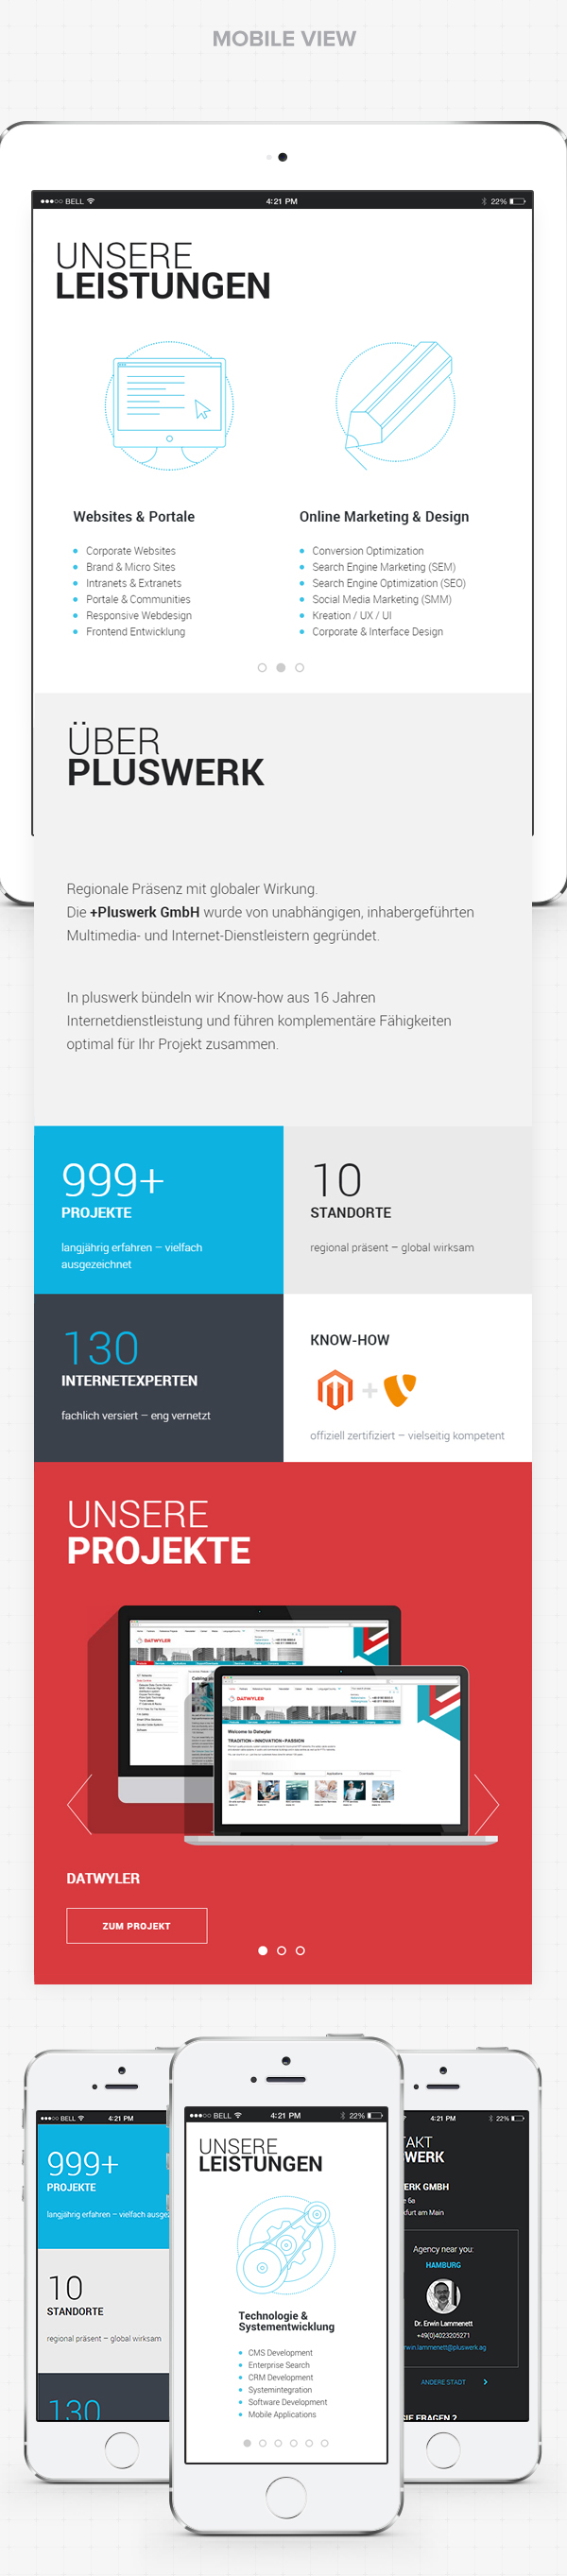 Pluswerk agency online marketing   magento TYPO3 germany Deutschland Responsive onepage development design